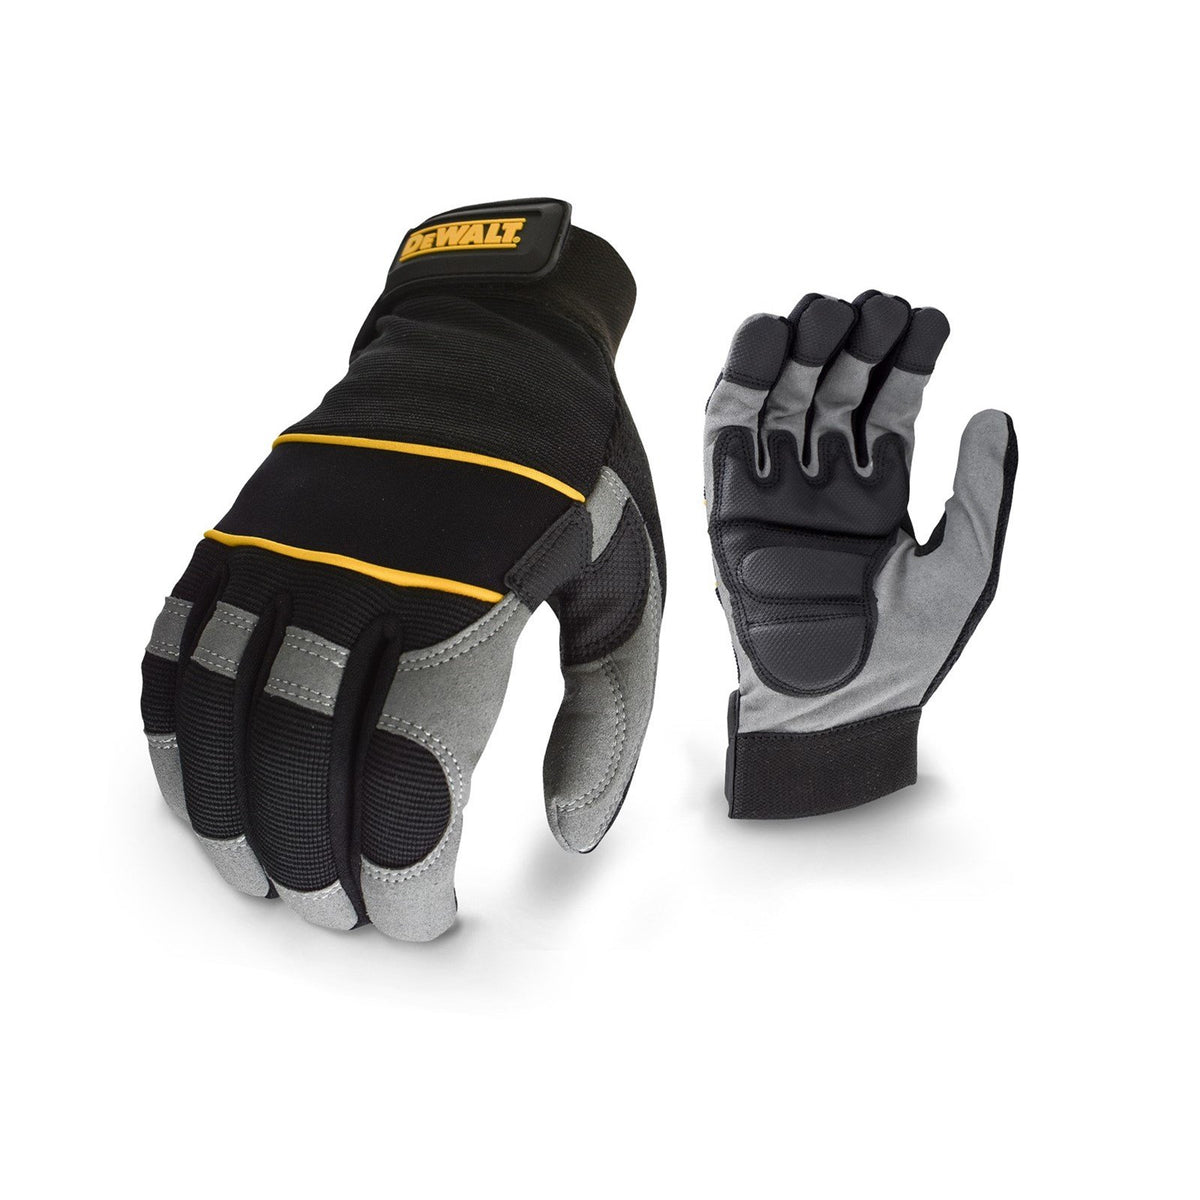 Dewalt DPG33 Power Tool Glove - Black/Yellow/Orange - Size Itm (35421-66002-01)